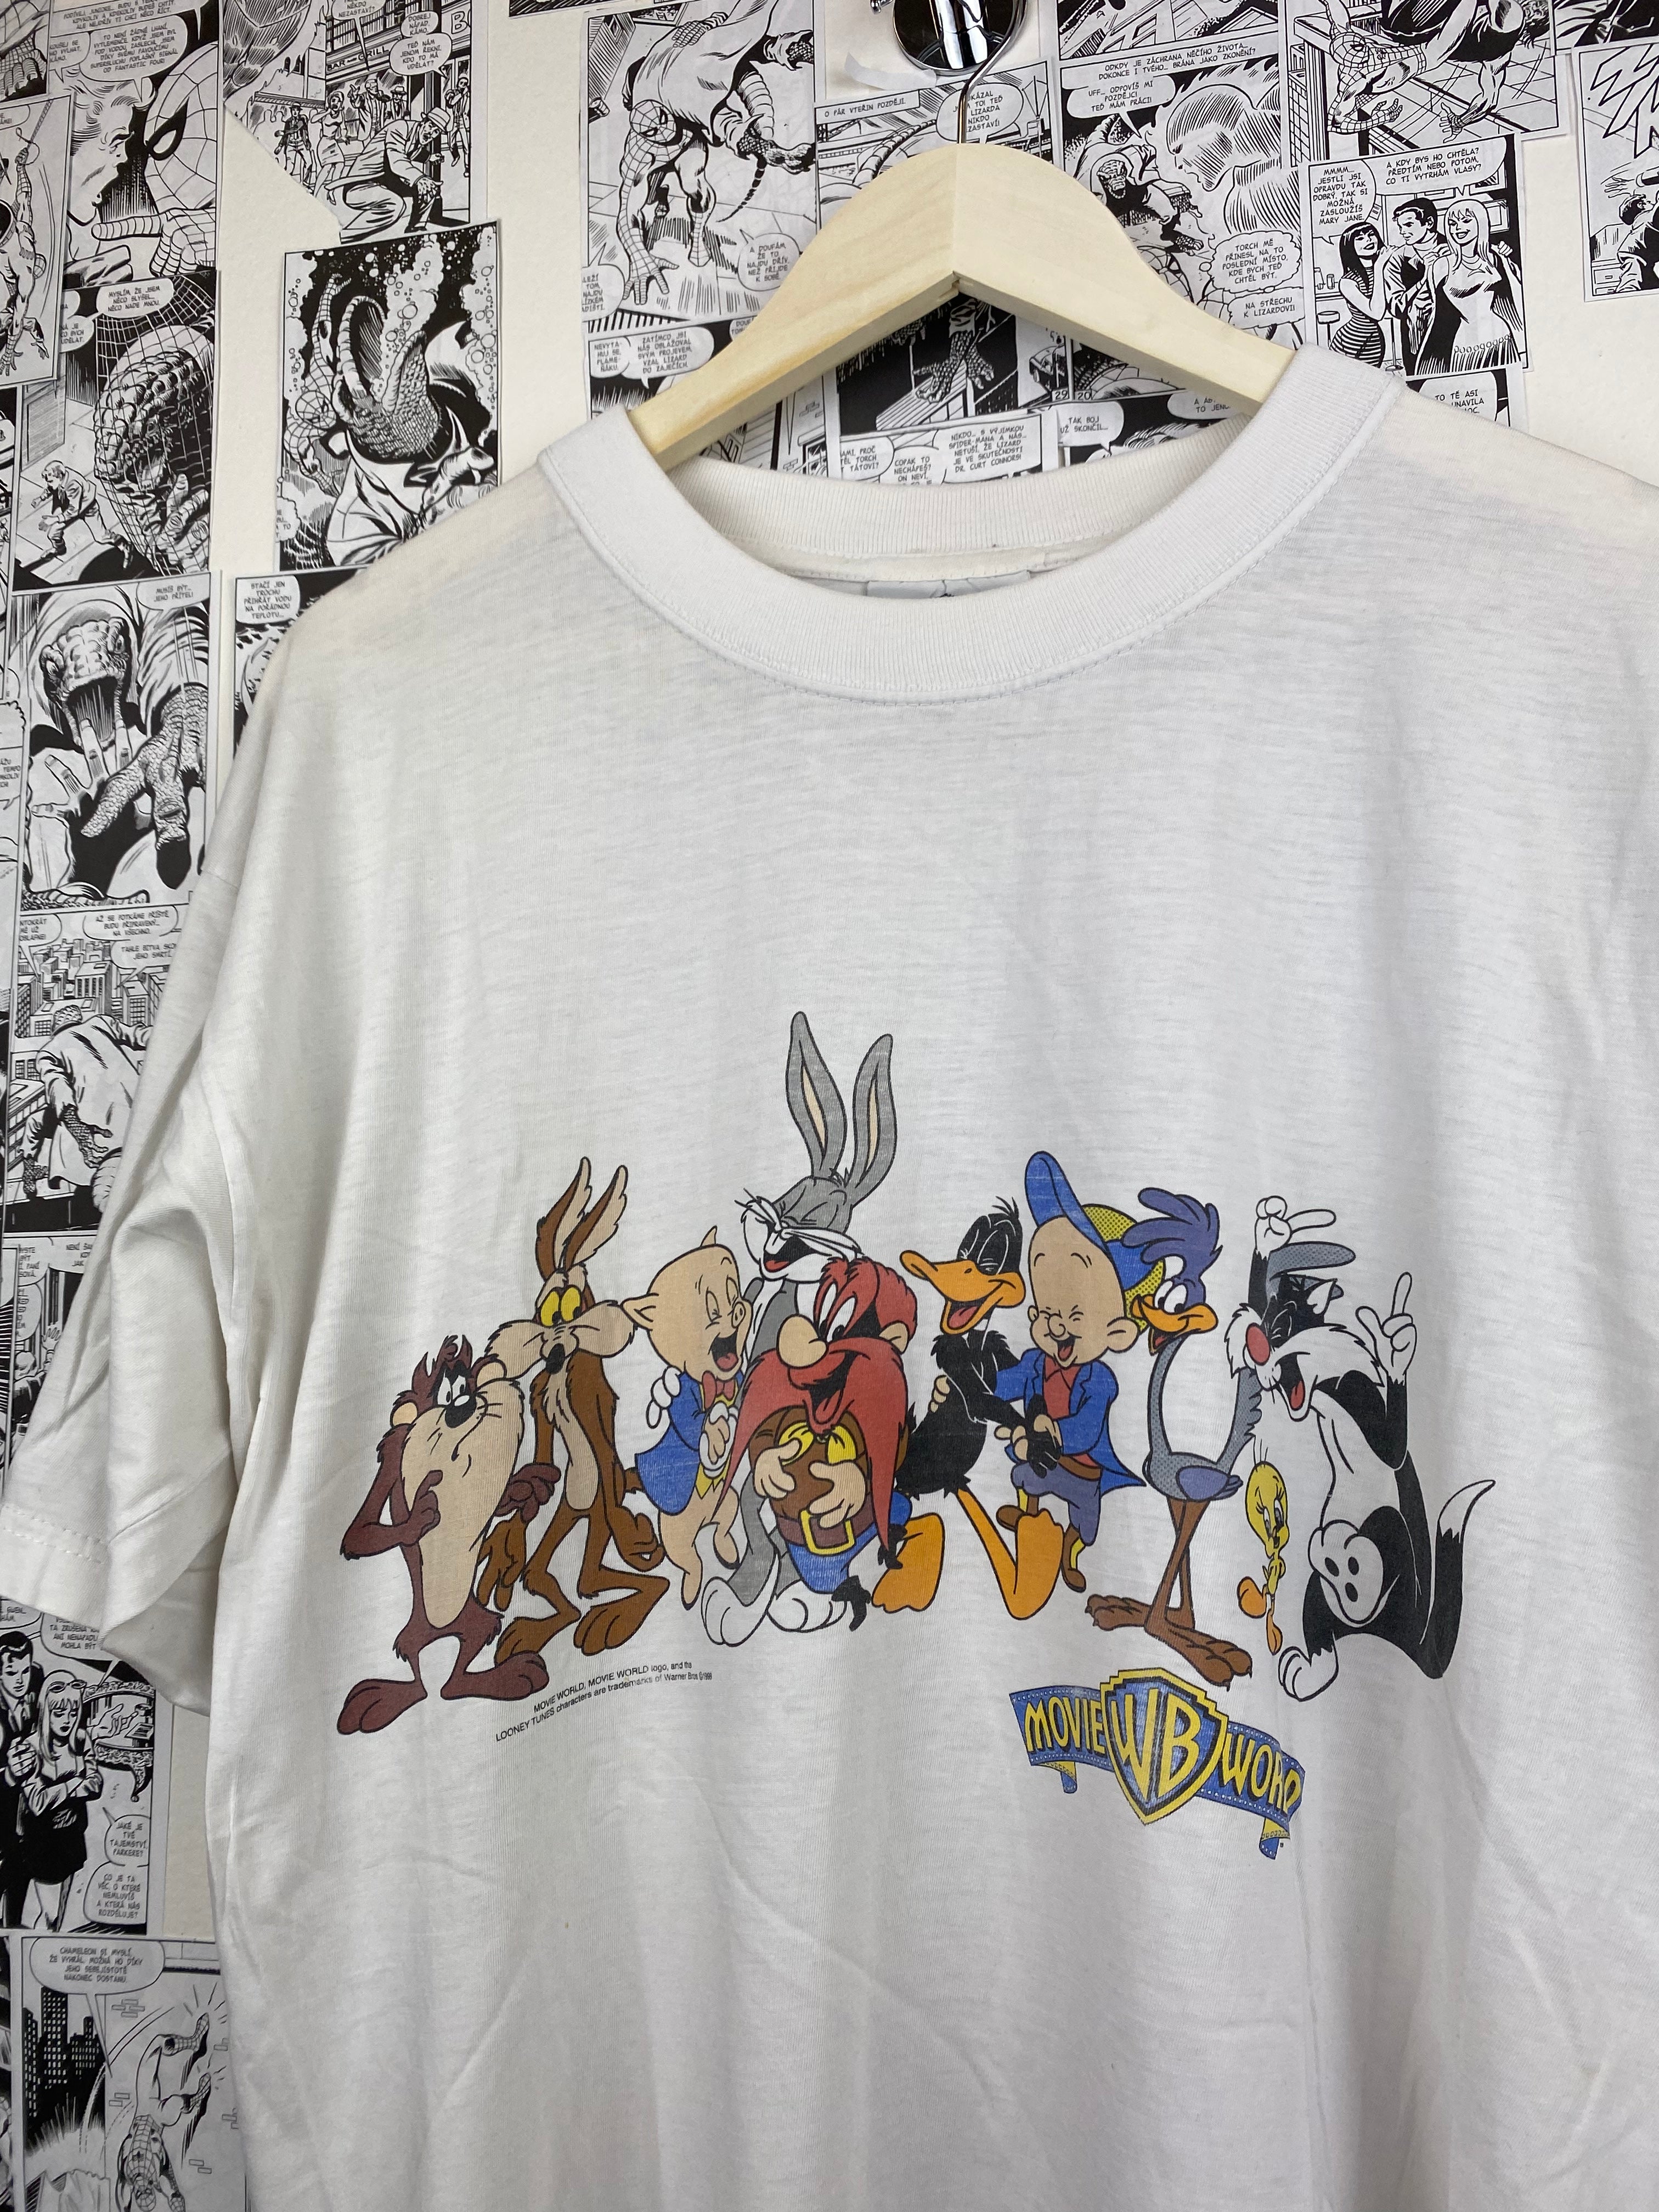 Vintage Looney Tunes 1998 t-shirt - size XL